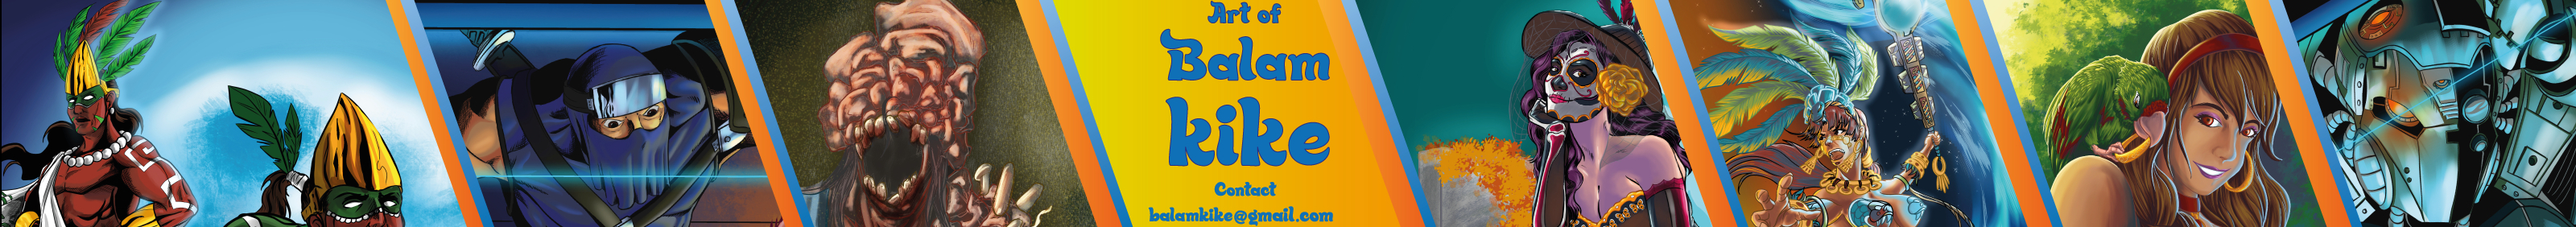 Balam Kike's profile banner